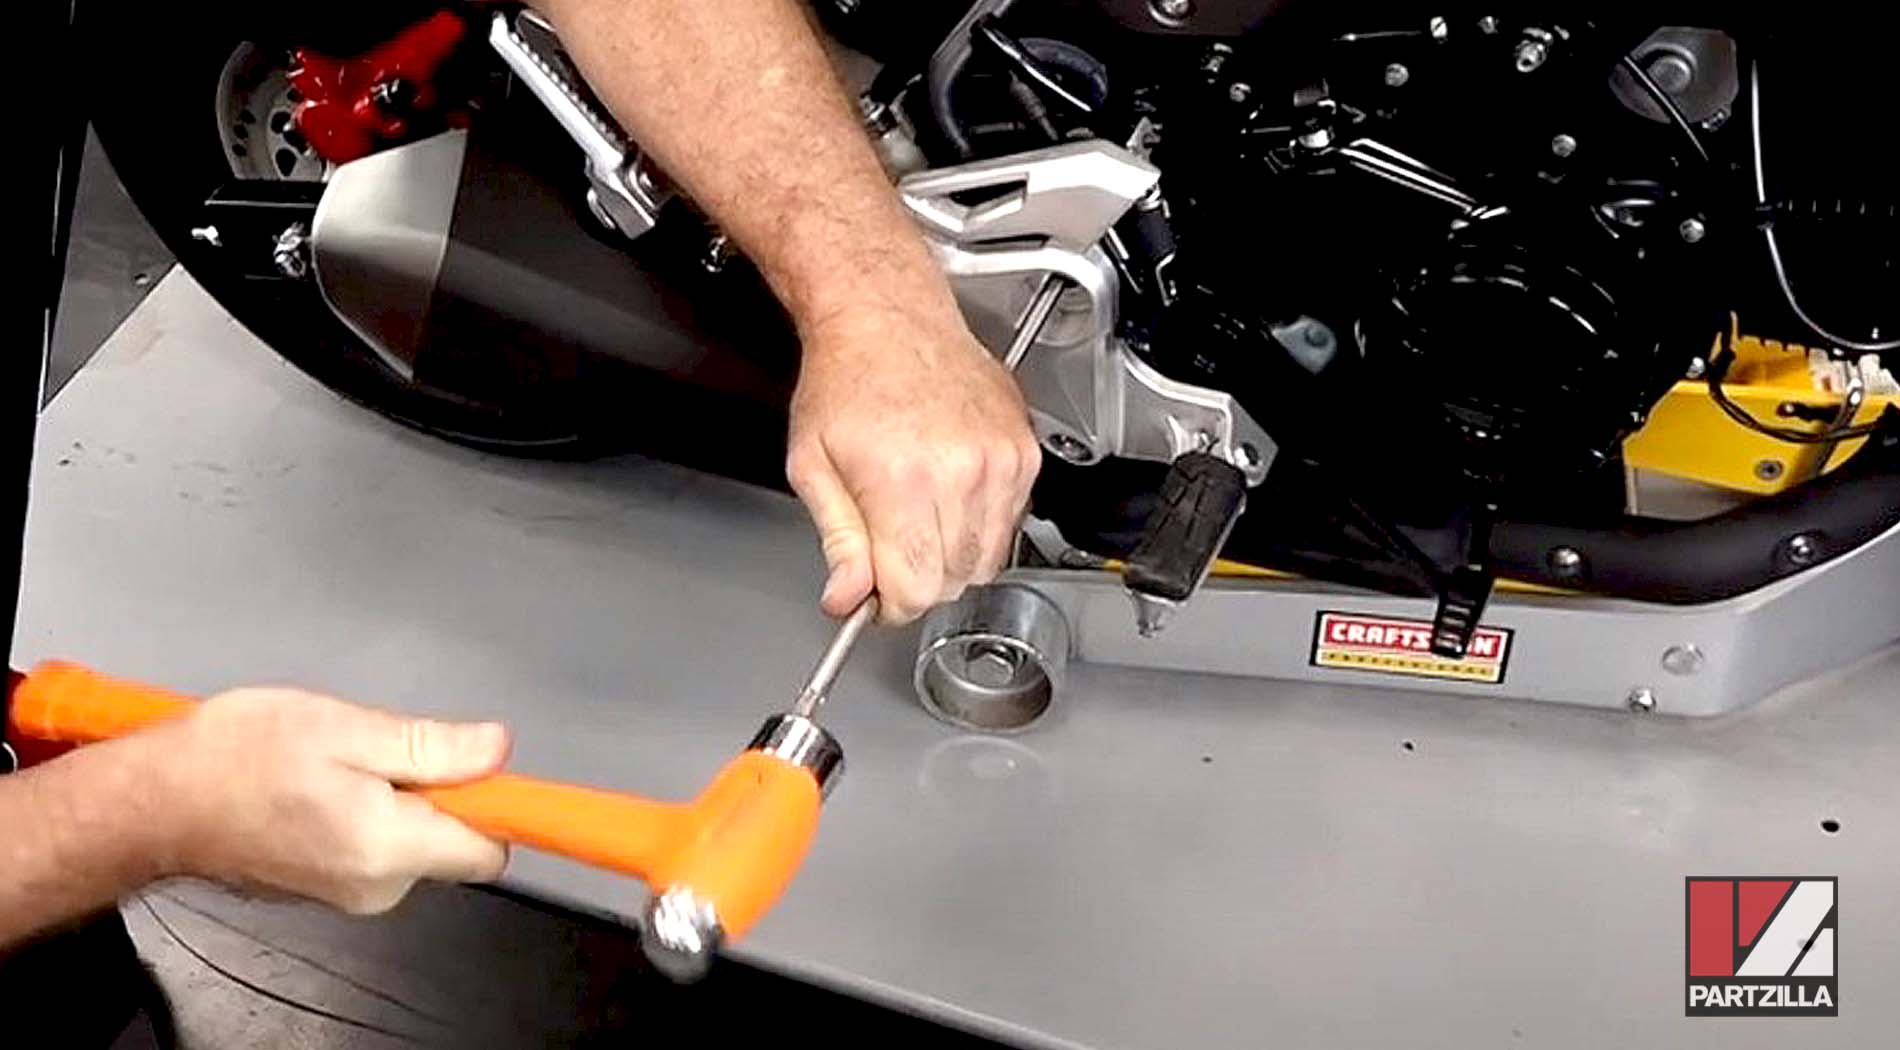 2018 Honda Grom 125 rearset upgrade gearshift removal